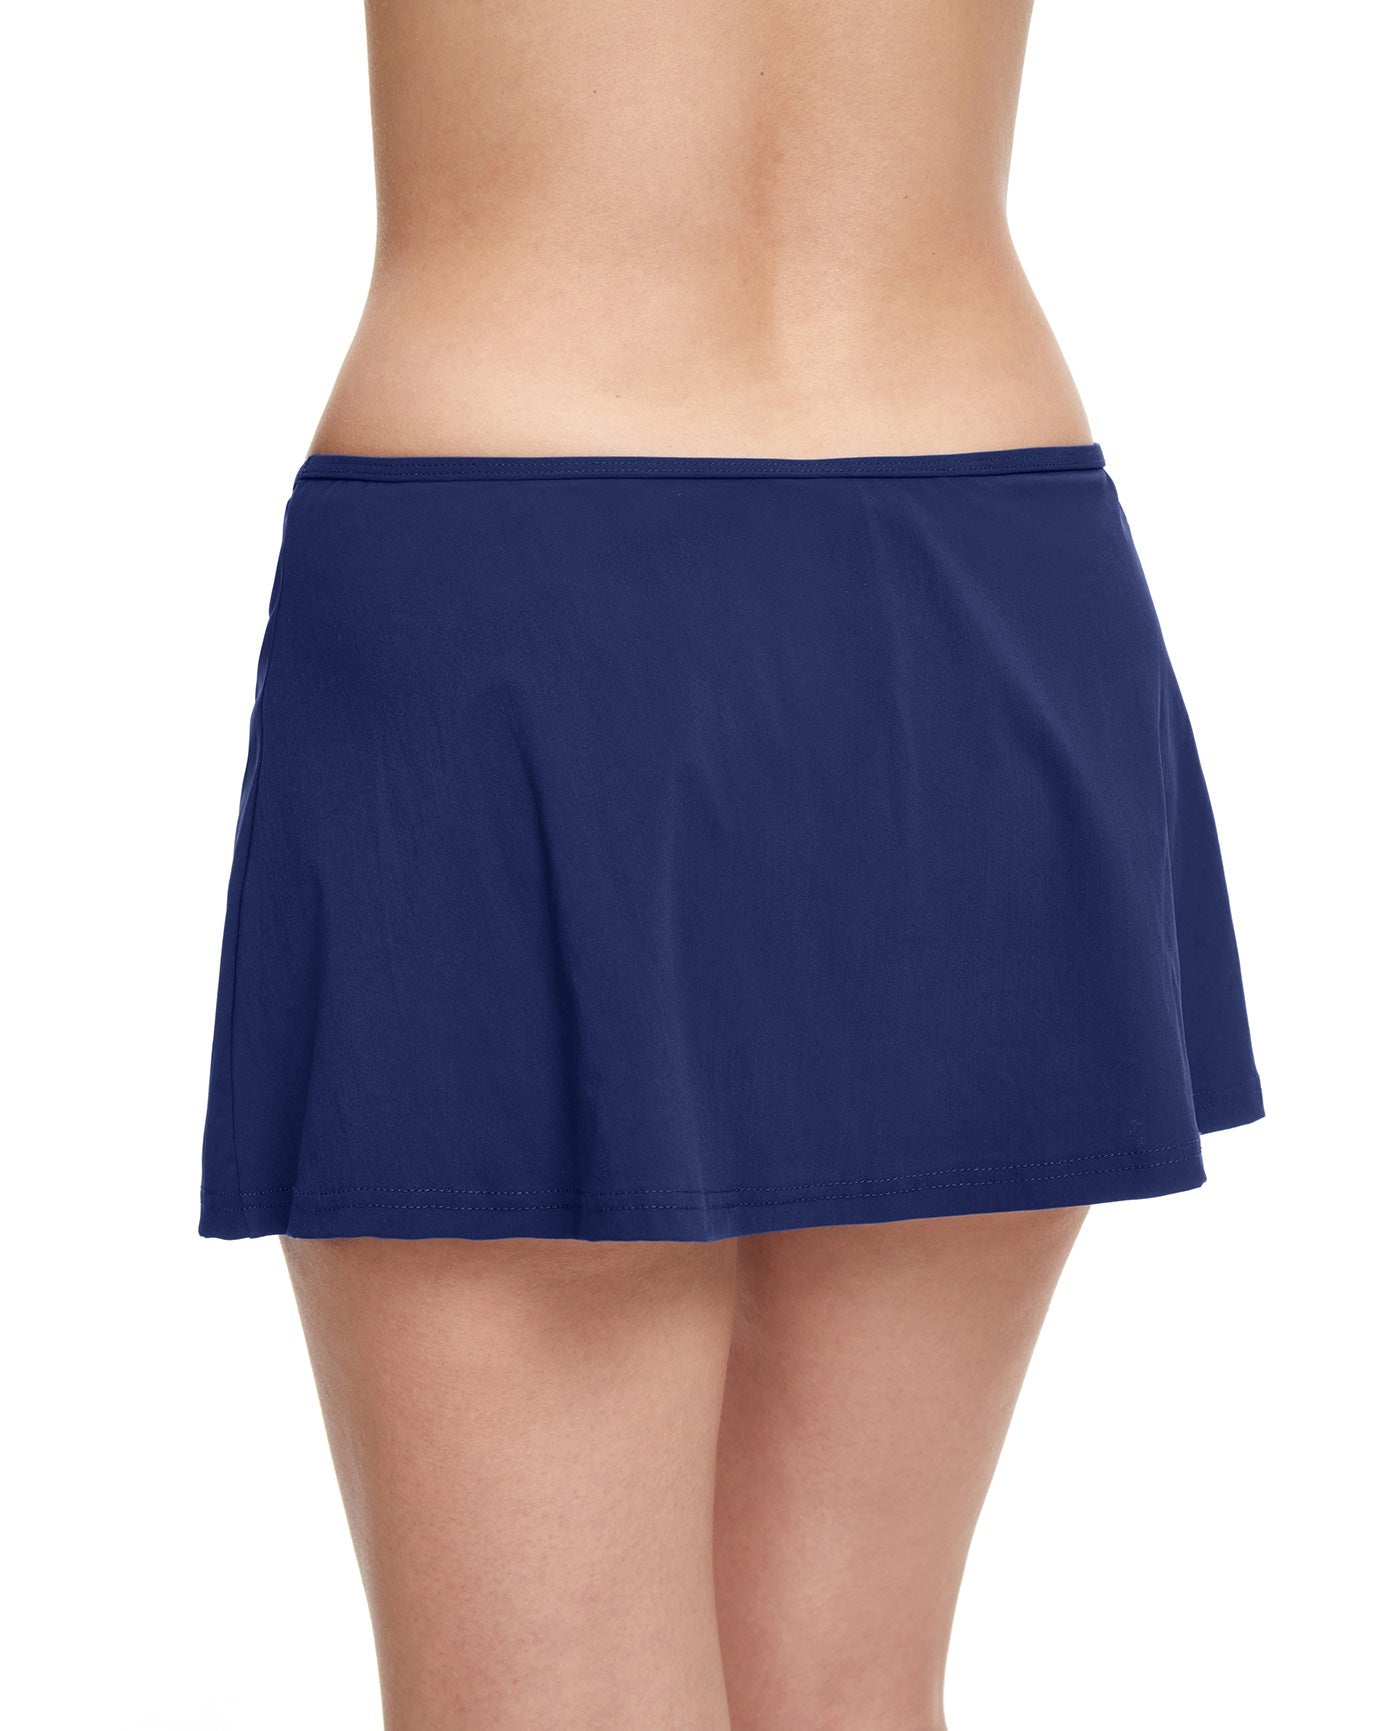 Back View Of Profile By Gottex Tutti Frutti Side Slit Cinch Swim Skirt | PROFILE TUTTI FRUTTI NAVY